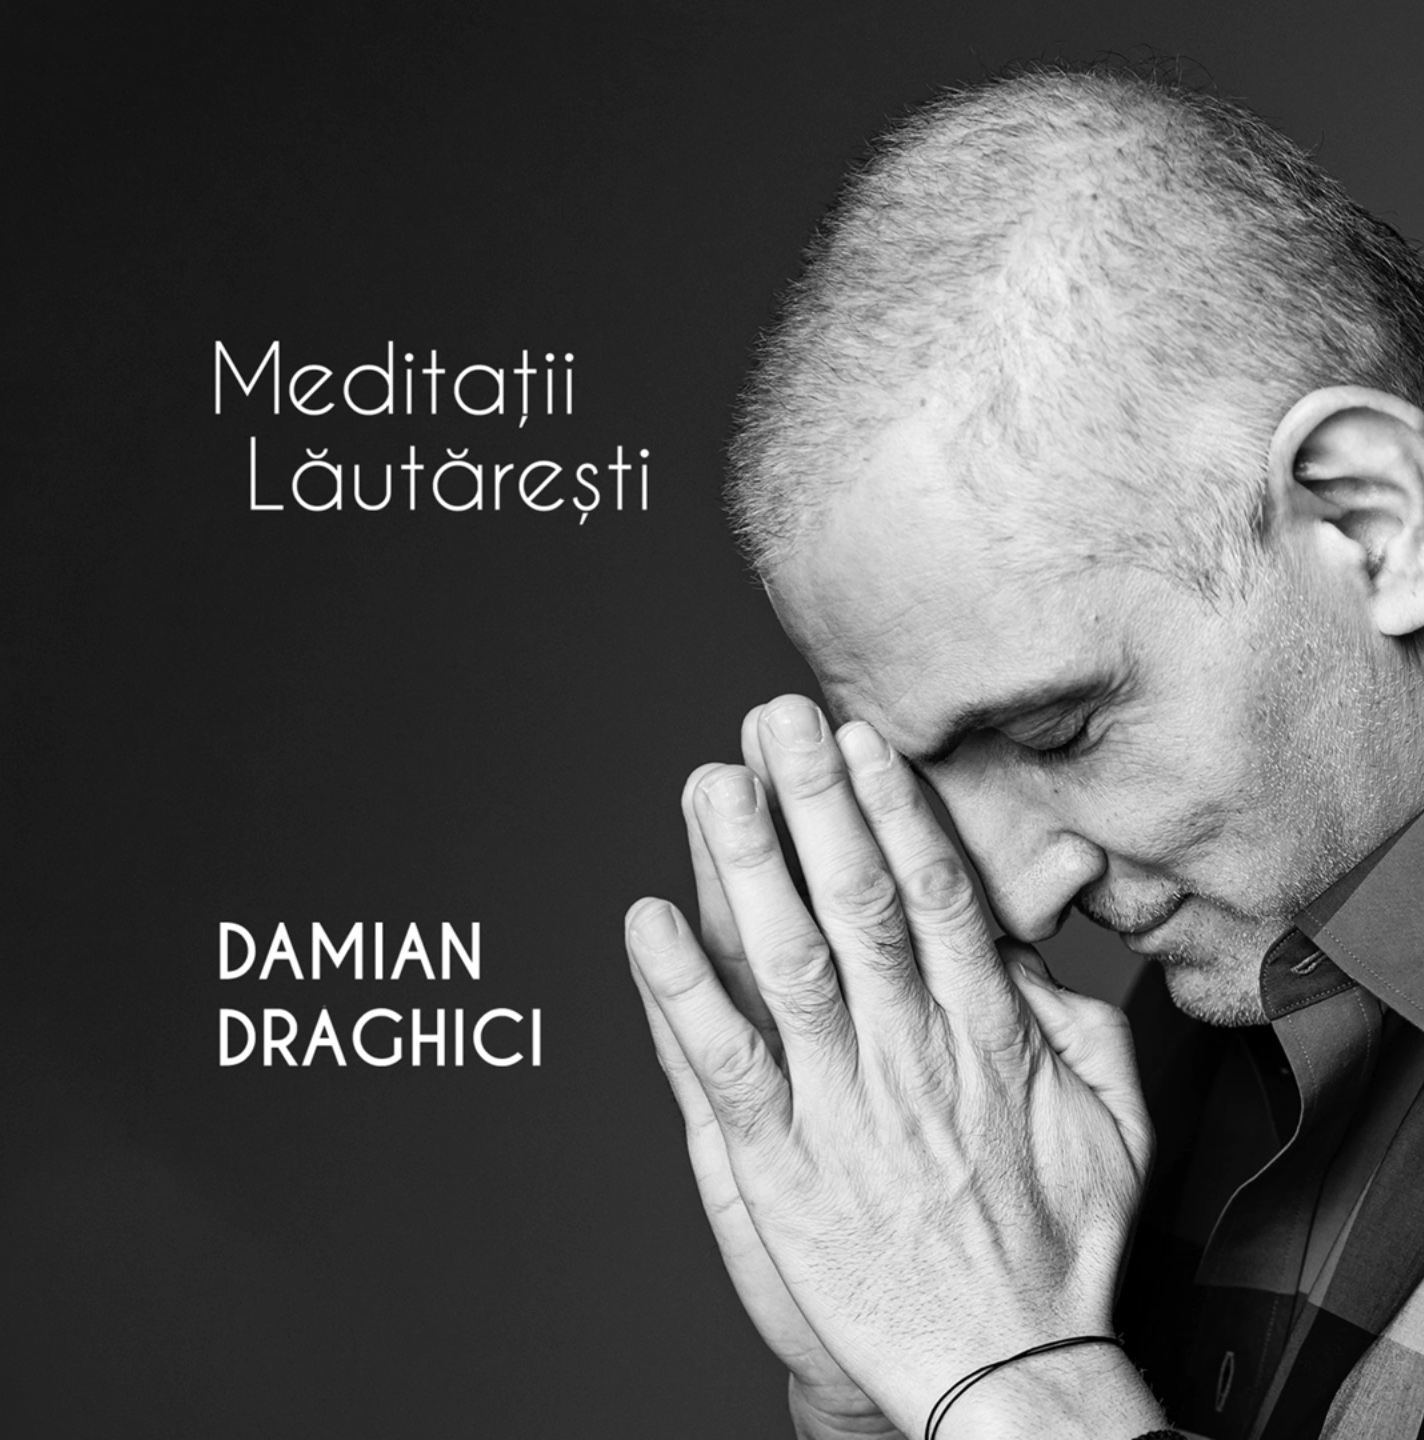 Meditatii Lautaresti | Damian Draghici